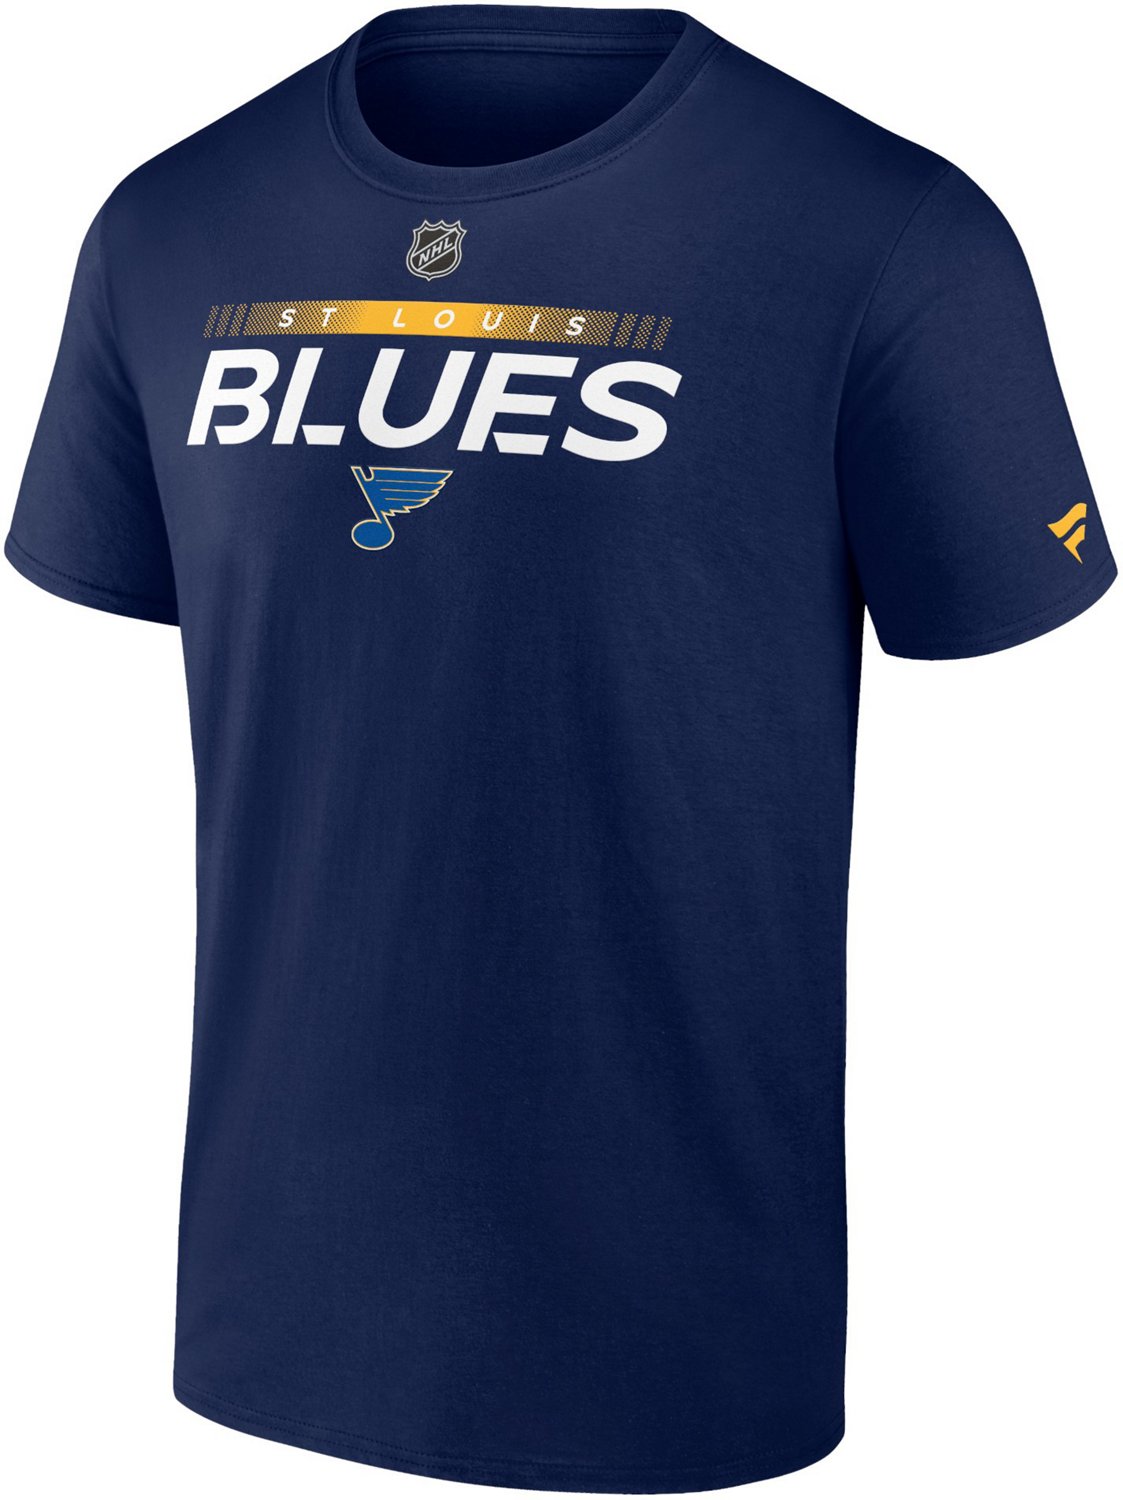 St. Louis Blues Gear, Blues Jerseys, St. Louis Blues Clothing, Blues Pro  Shop, Blues Hockey Apparel